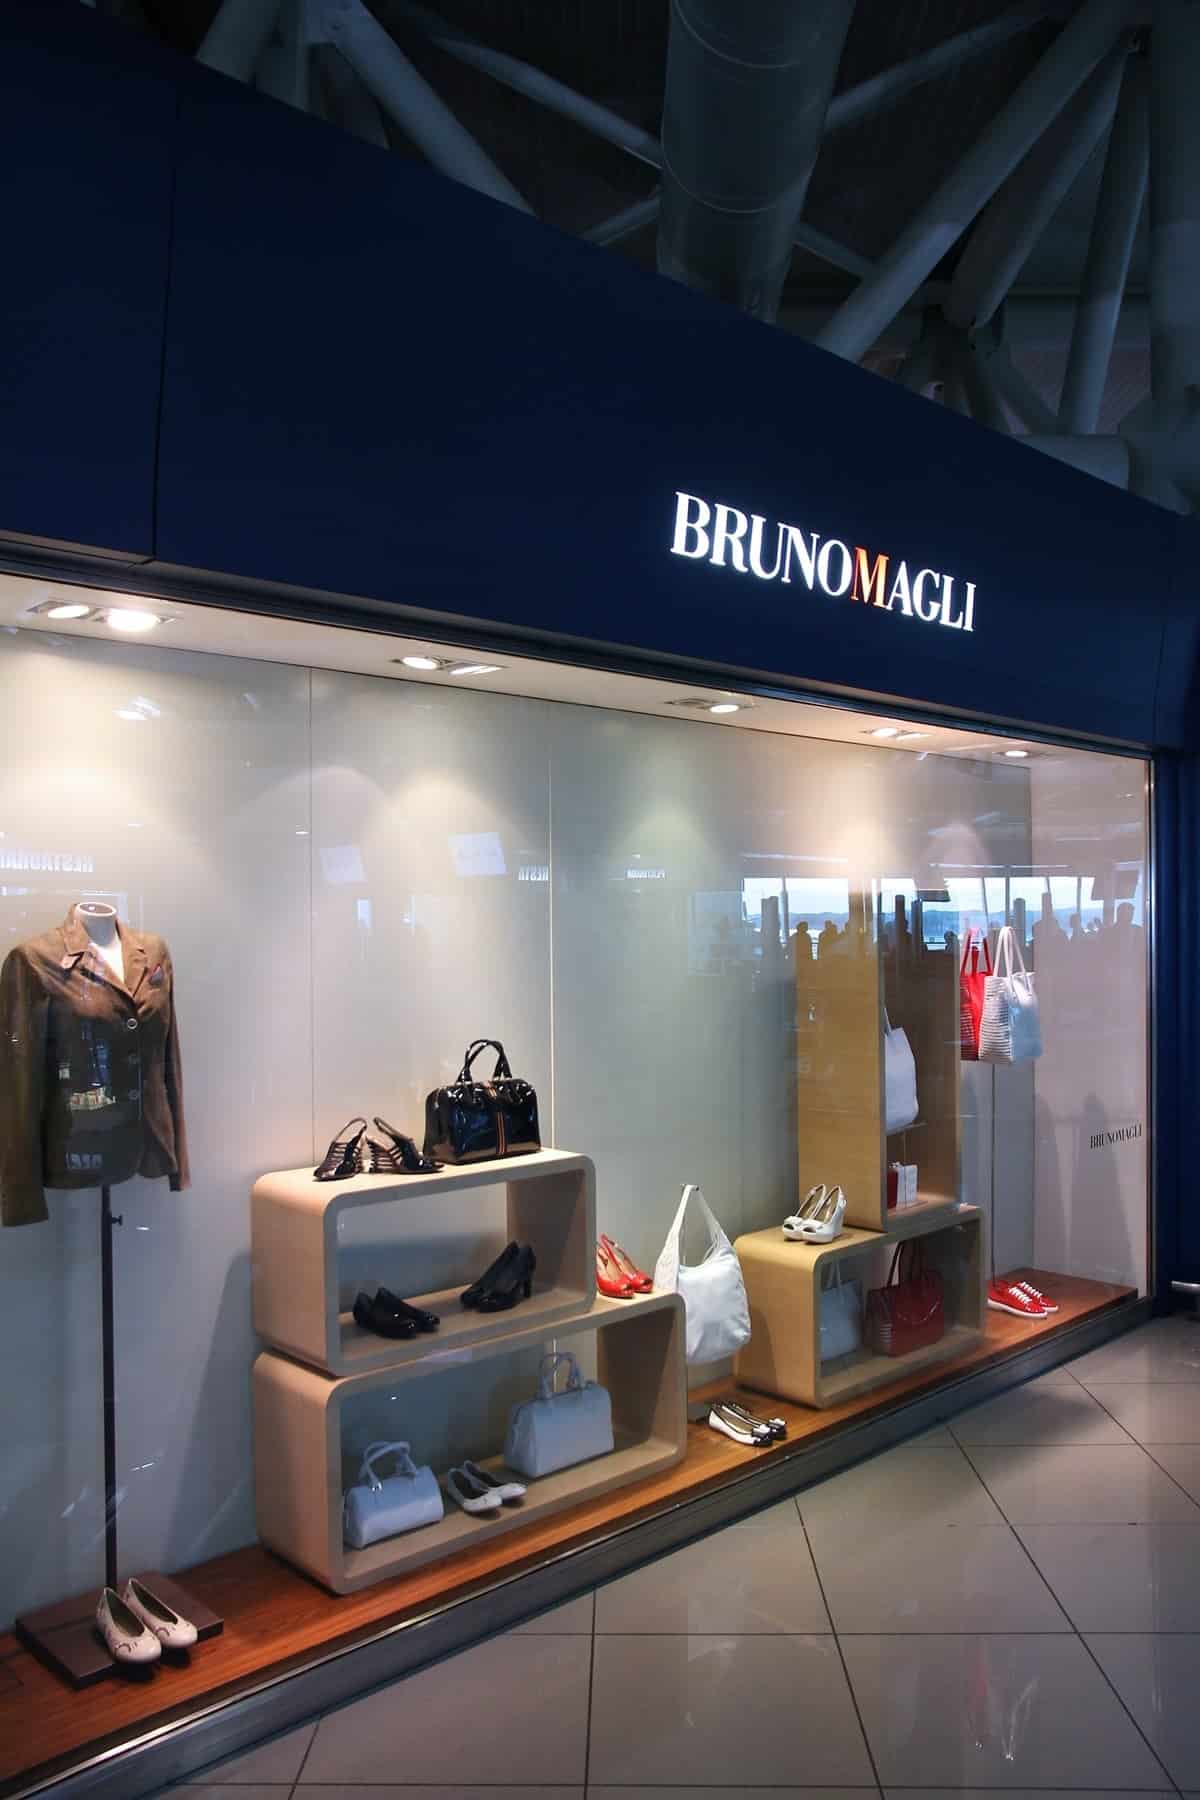 is bruno magli a luxury brand